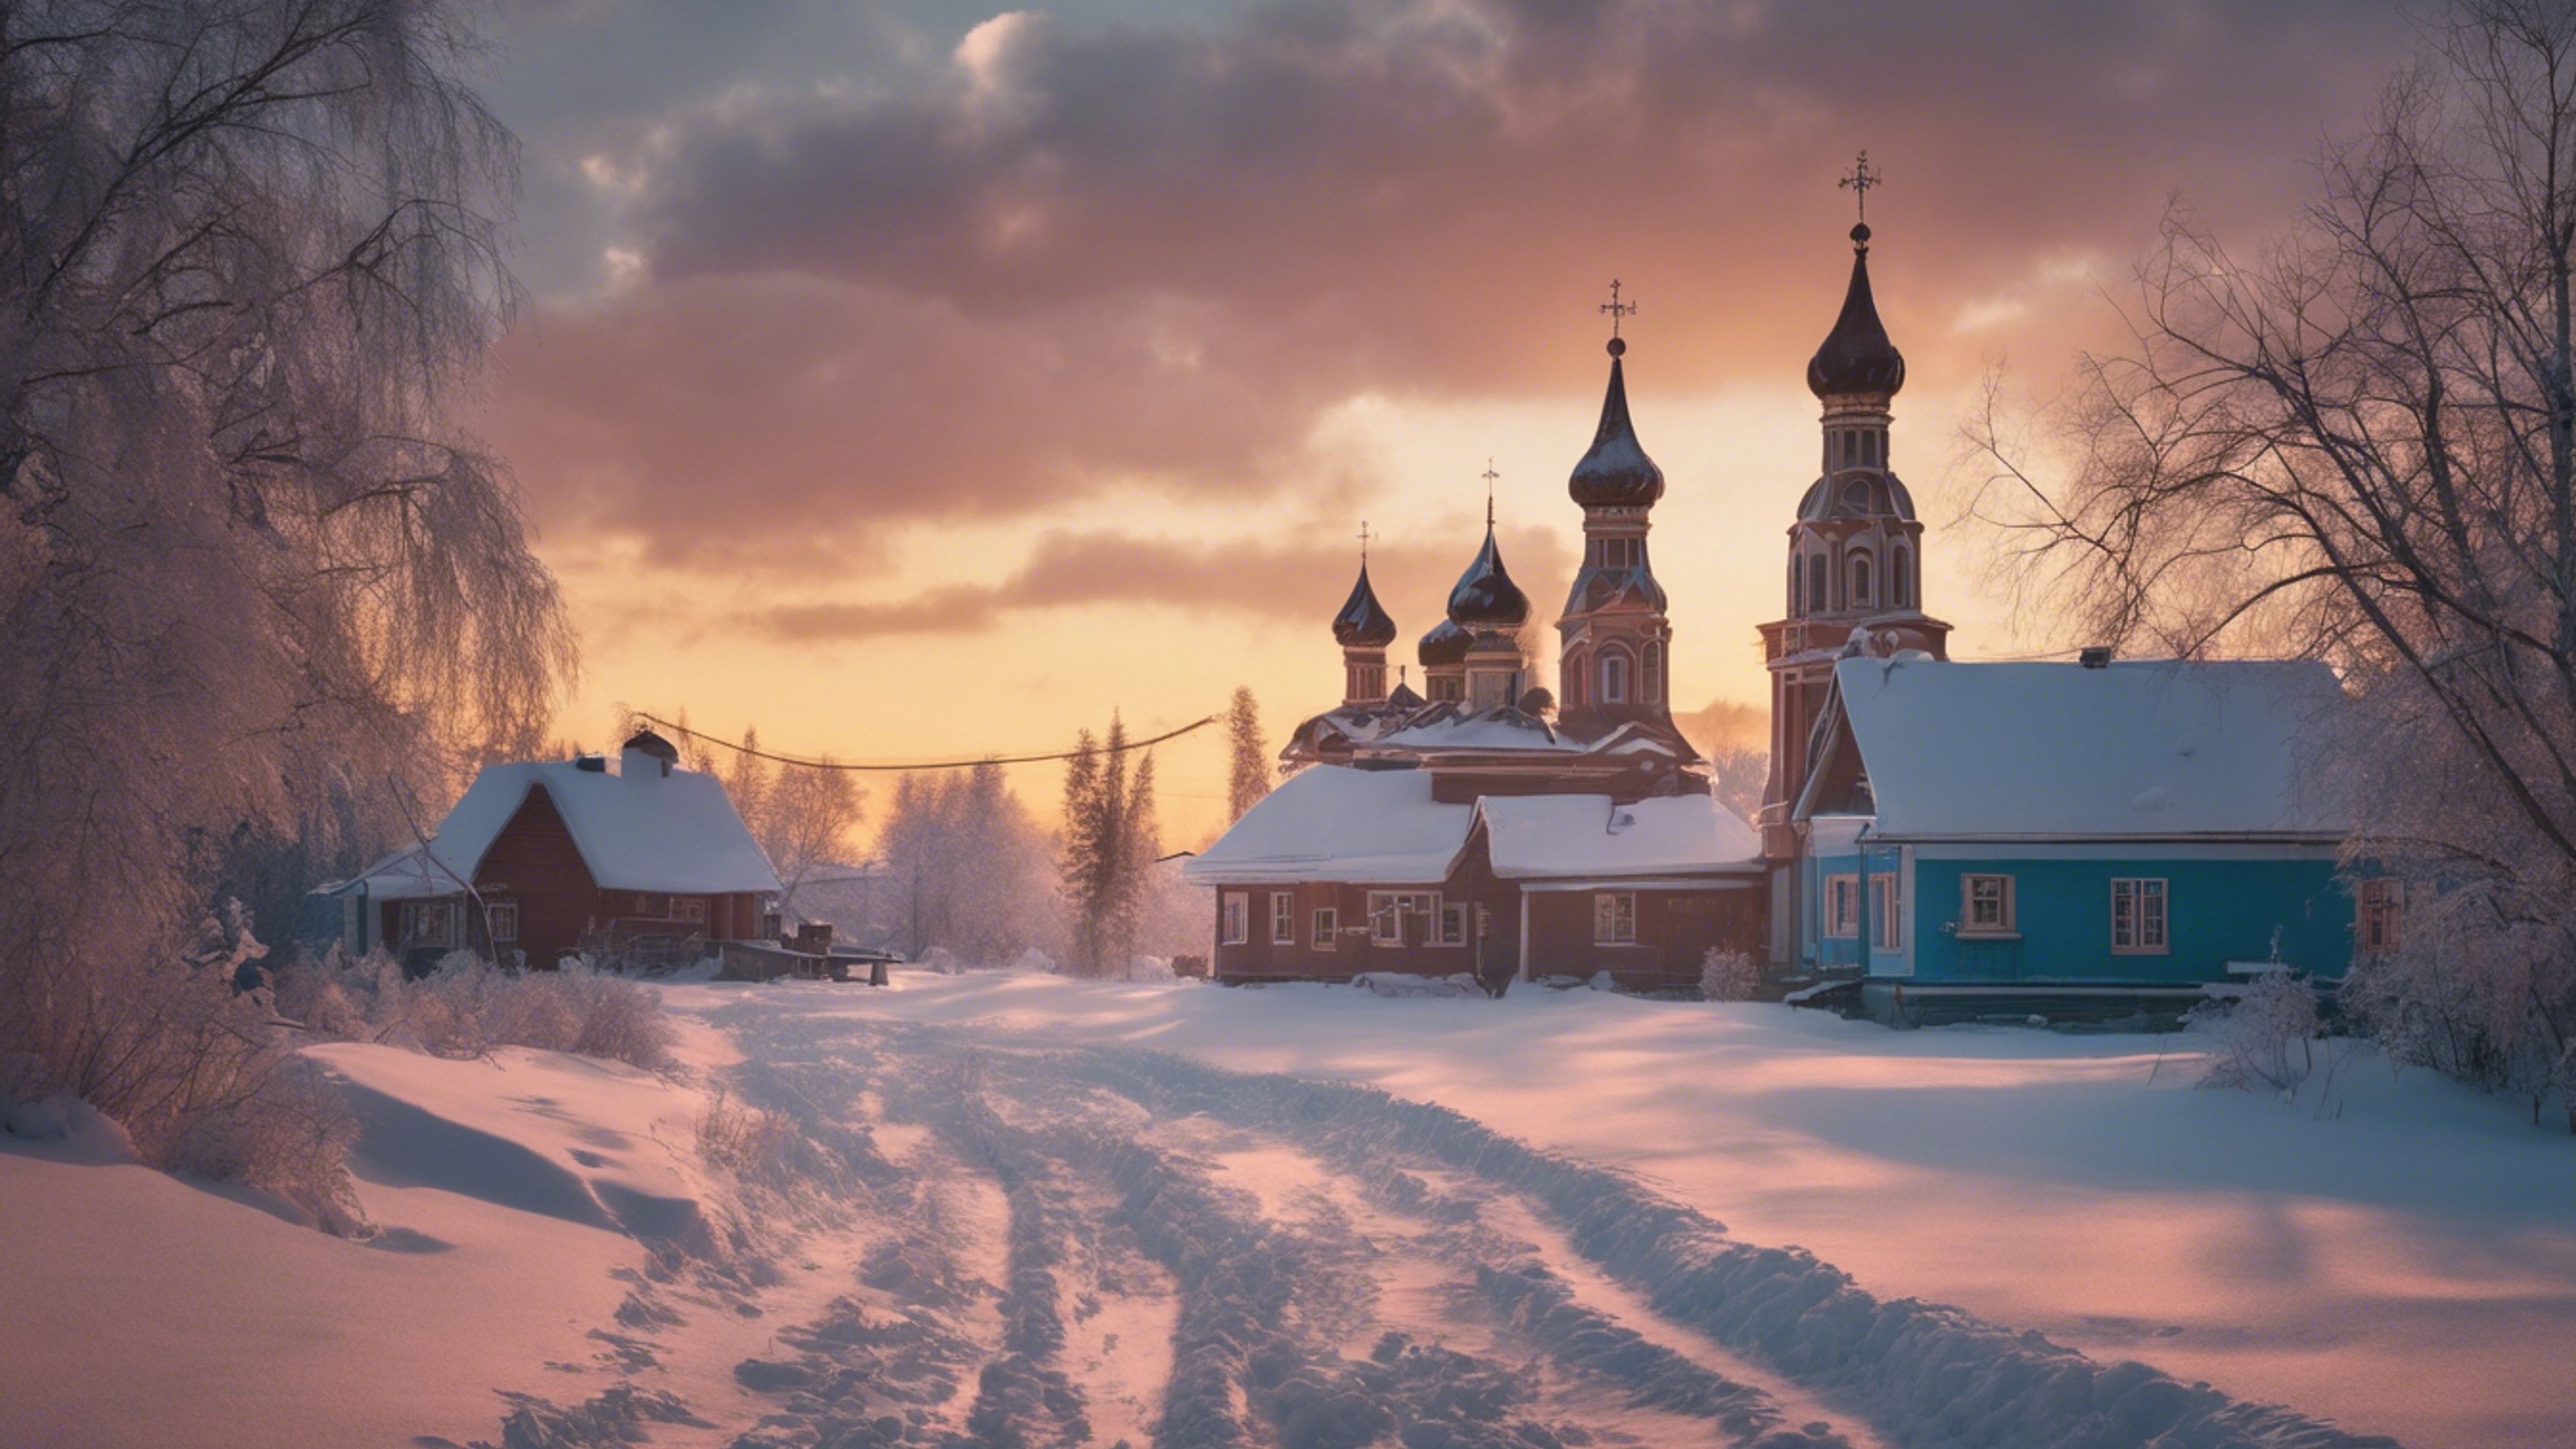 A snowbound Russian village under the mystic light of a nostalgic sunset. Ταπετσαρία[d590942729fa40abb5f5]